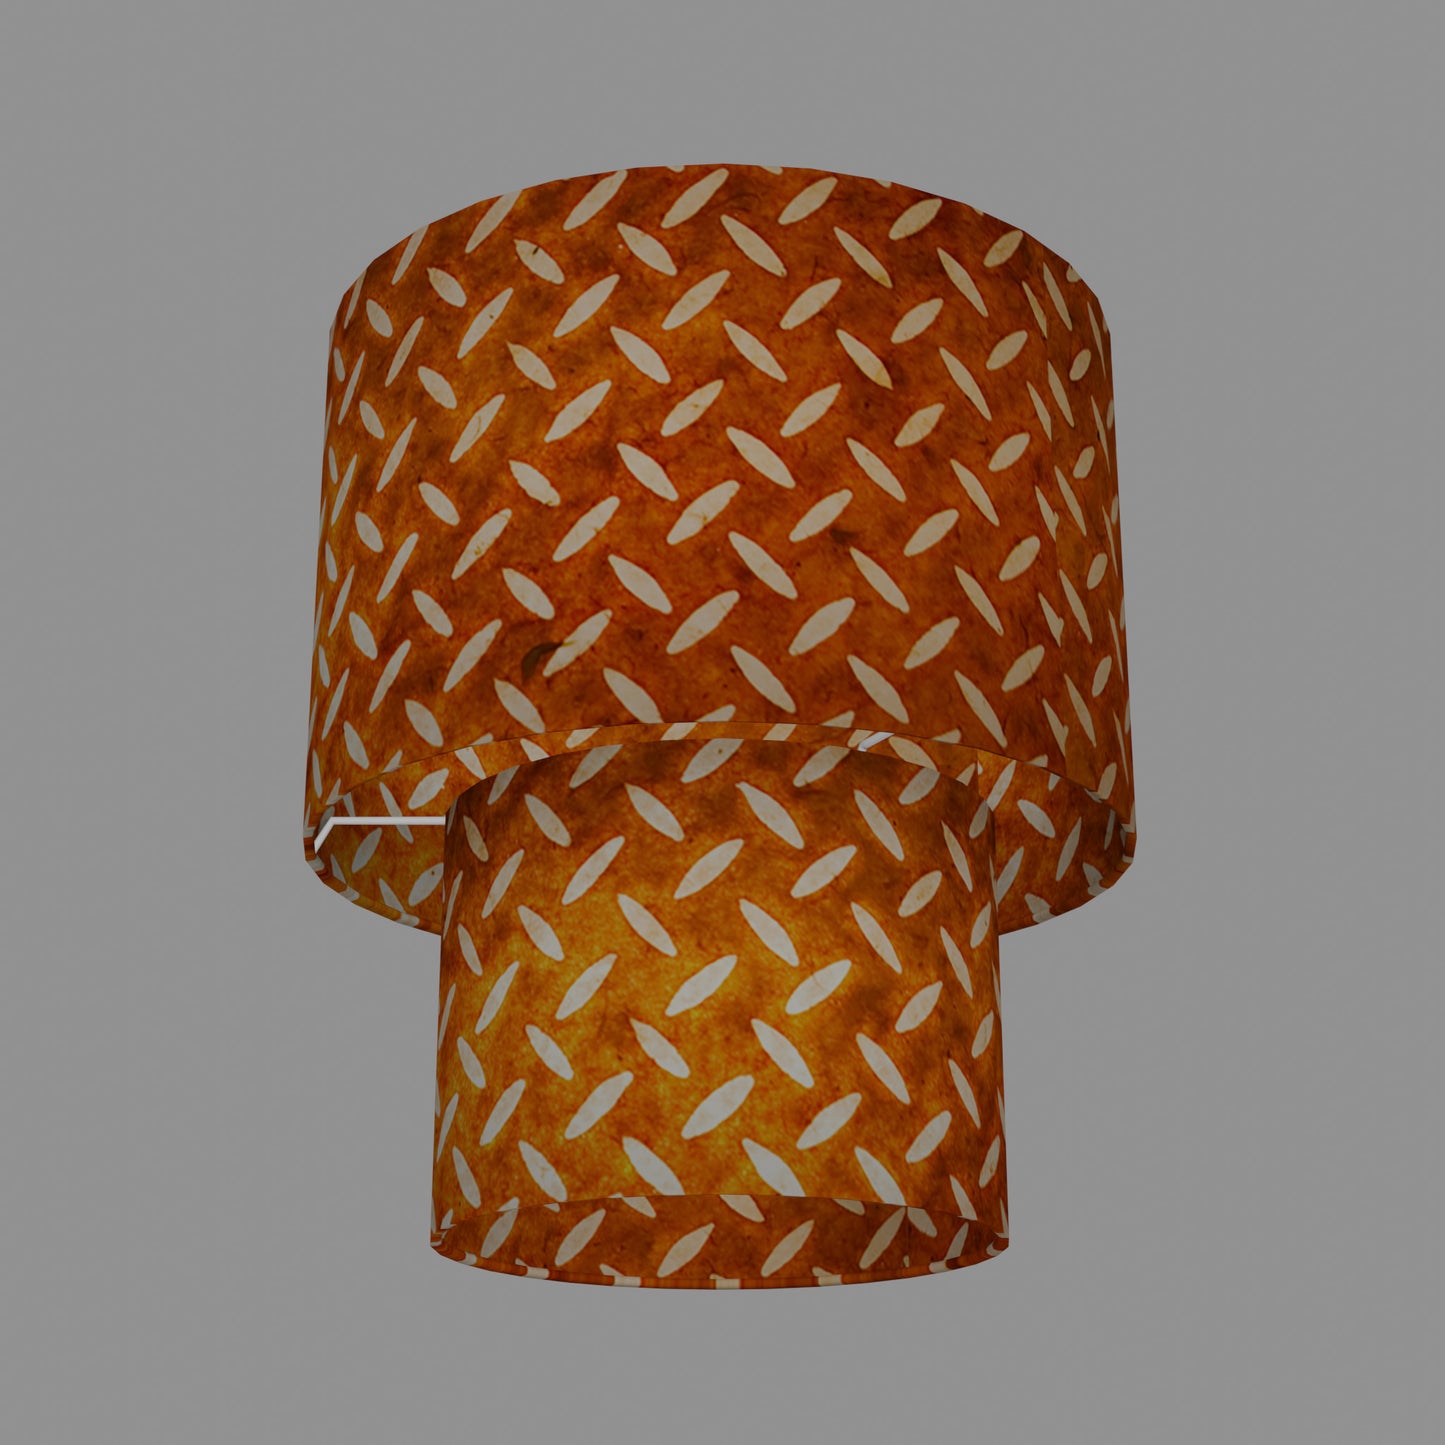 2 Tier Lamp Shade - P12 - Batik Tread Plate Brown, 30cm x 20cm & 20cm x 15cm